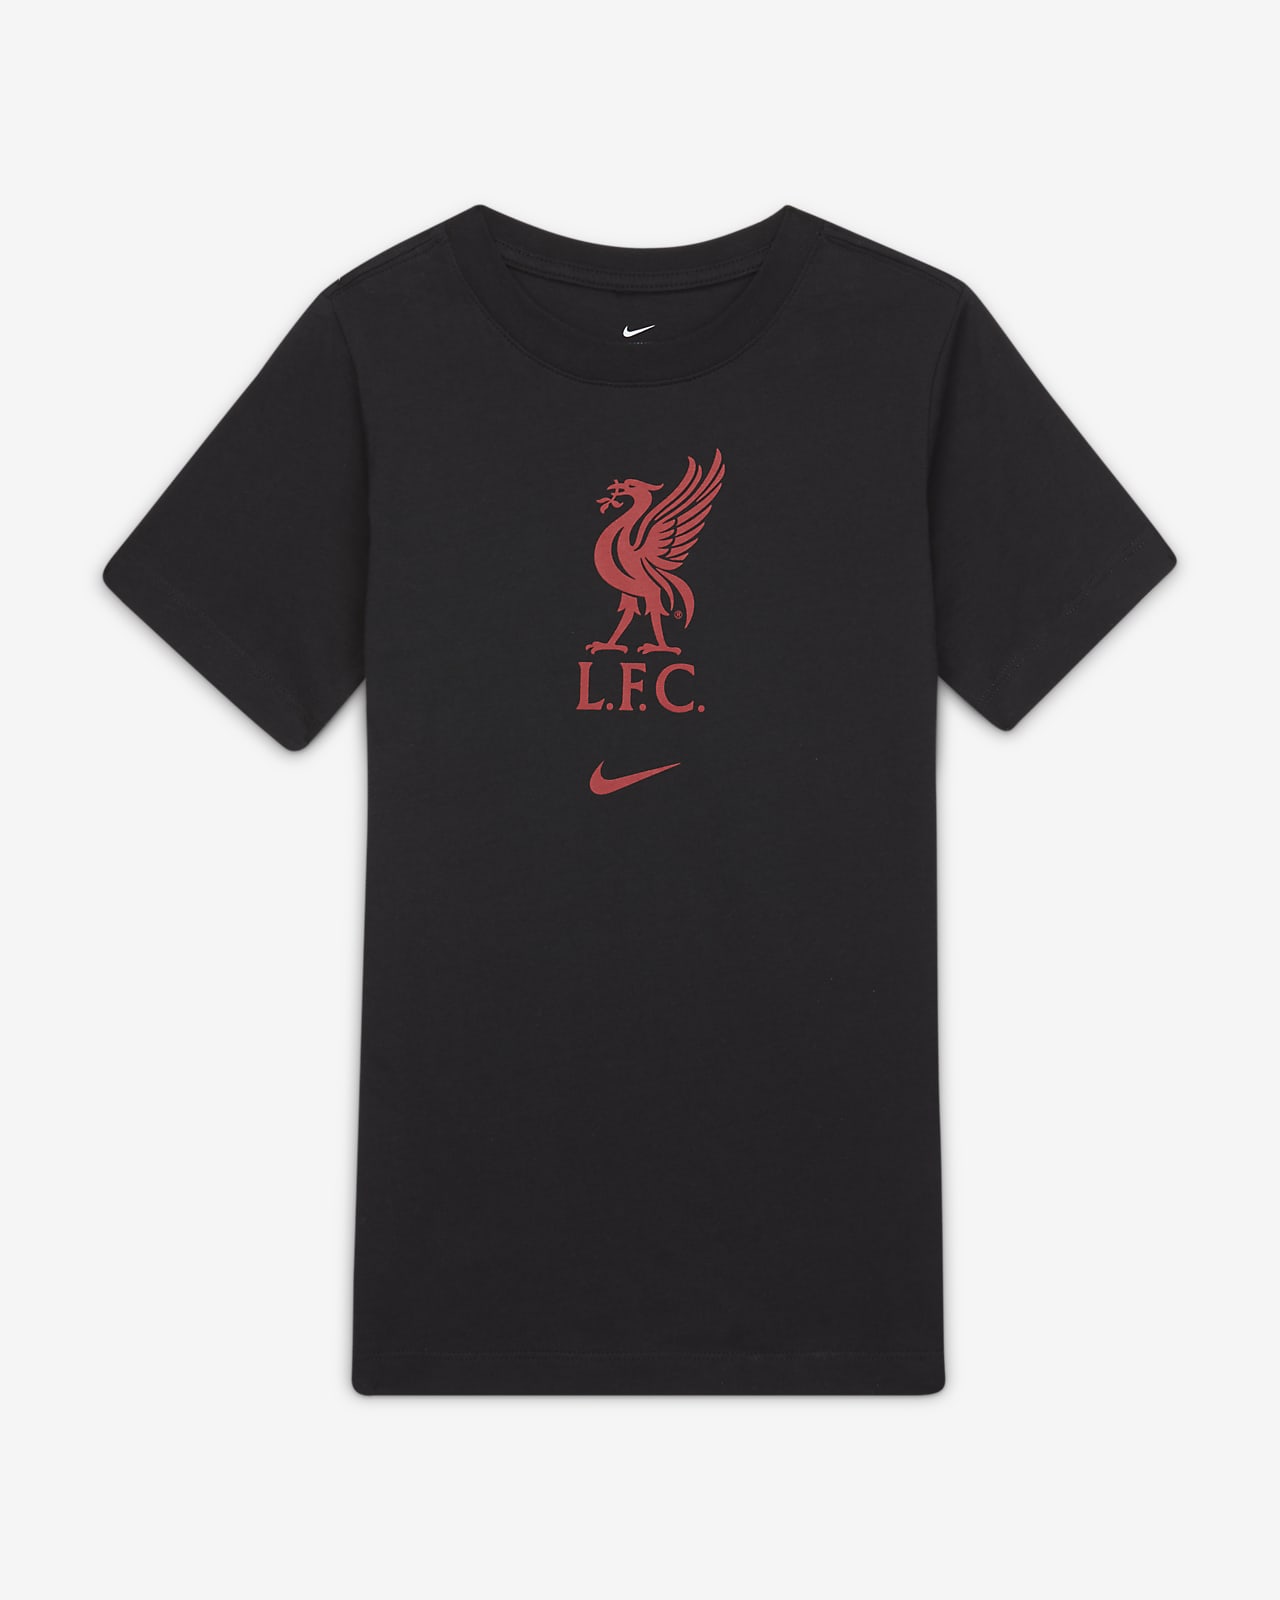 Liverpool F.C. Older Football T-Shirt. Nike